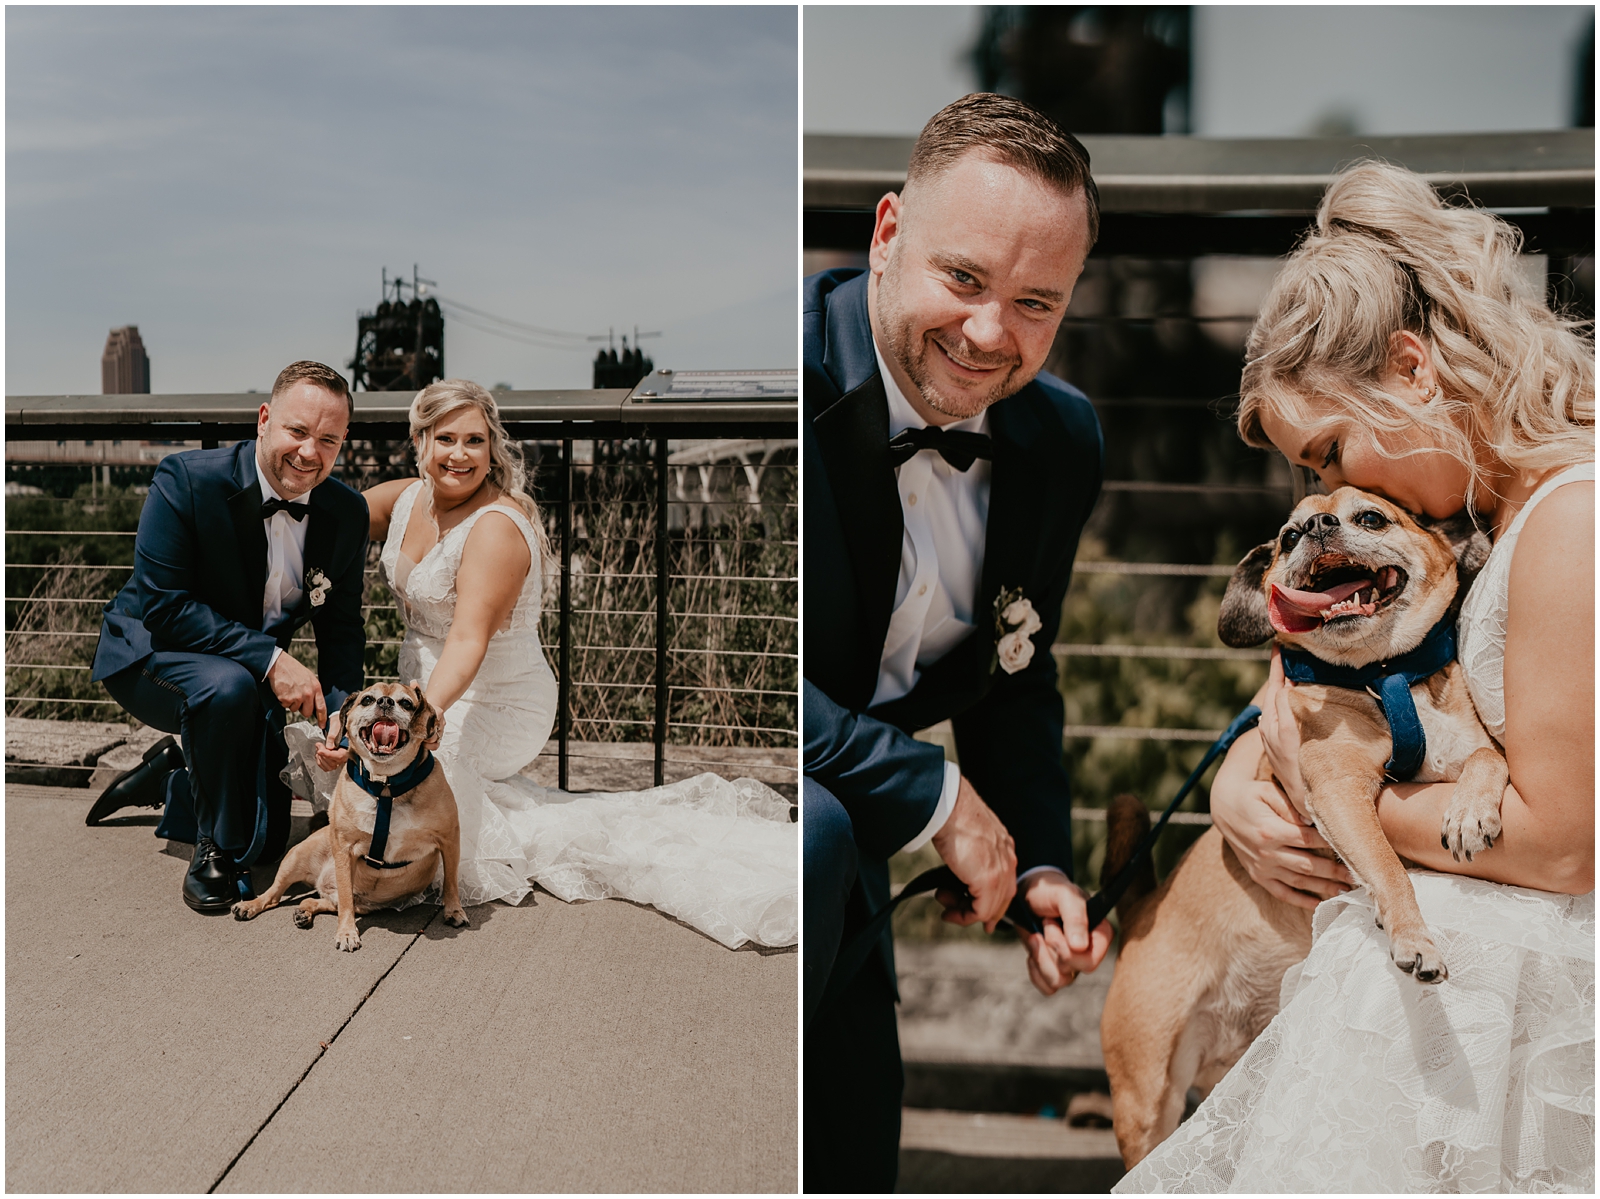 Wedding photos with dog